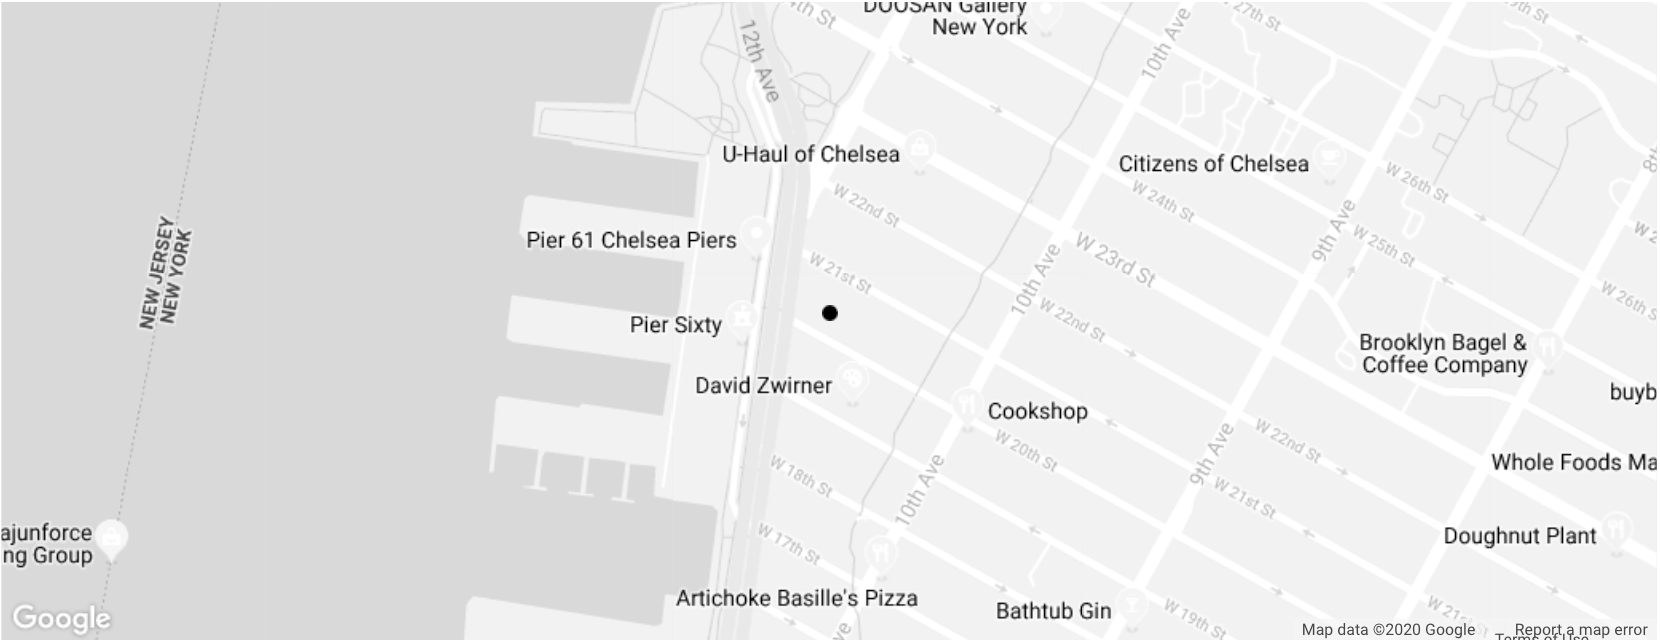 David Zwirner New York 20th Street Location